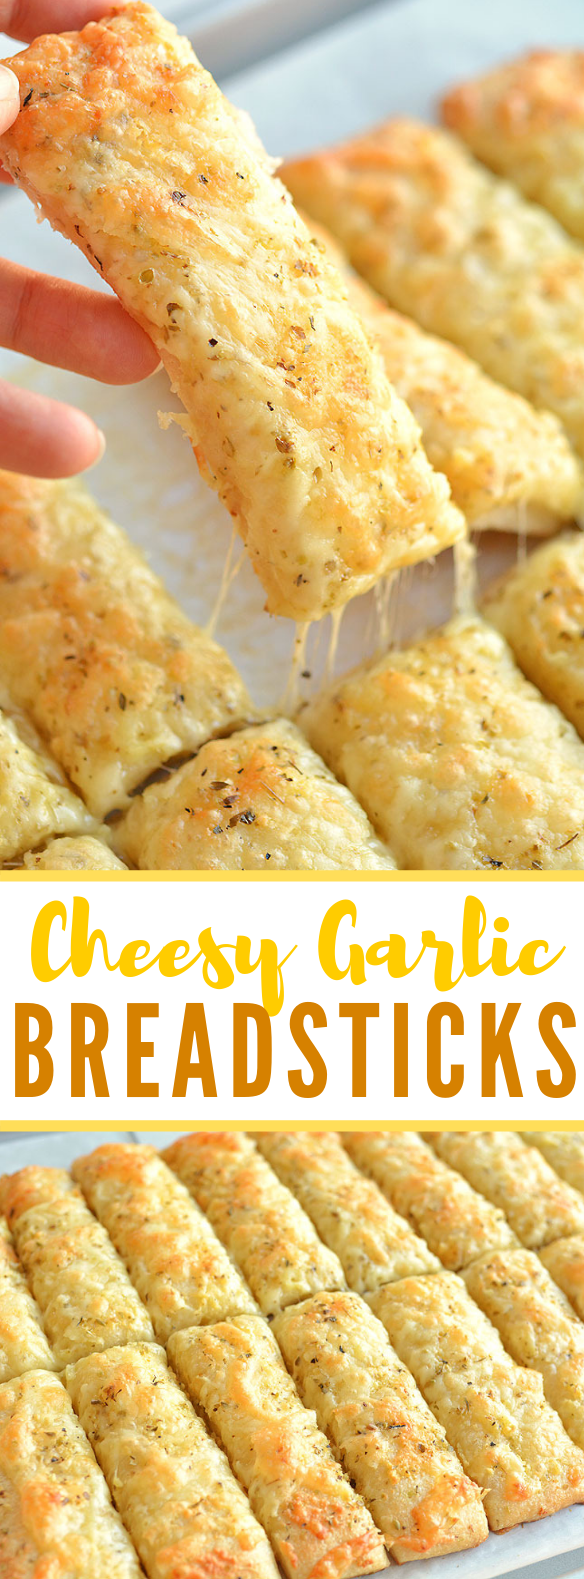 Homemade Cheesy Garlic Breadsticks Recipe #dinner #comfortfood